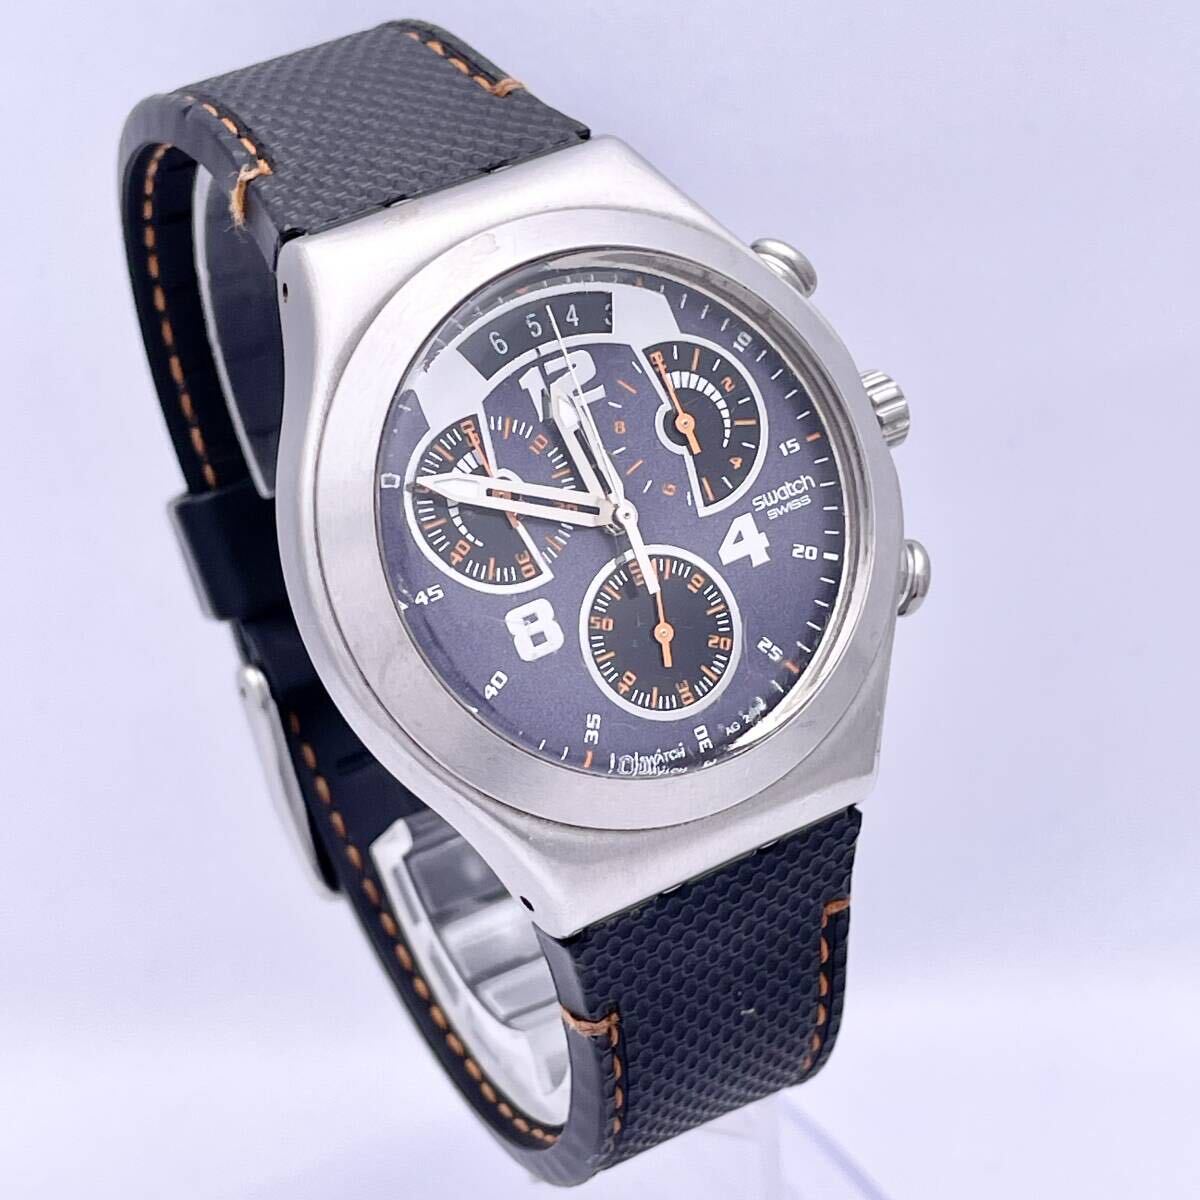 SWATCH Swatch IRONY Irony наручные часы часы кварц quartz SWISS MADE Швейцария производства 4 JEWELS 4 камень серебряный серебряный P260